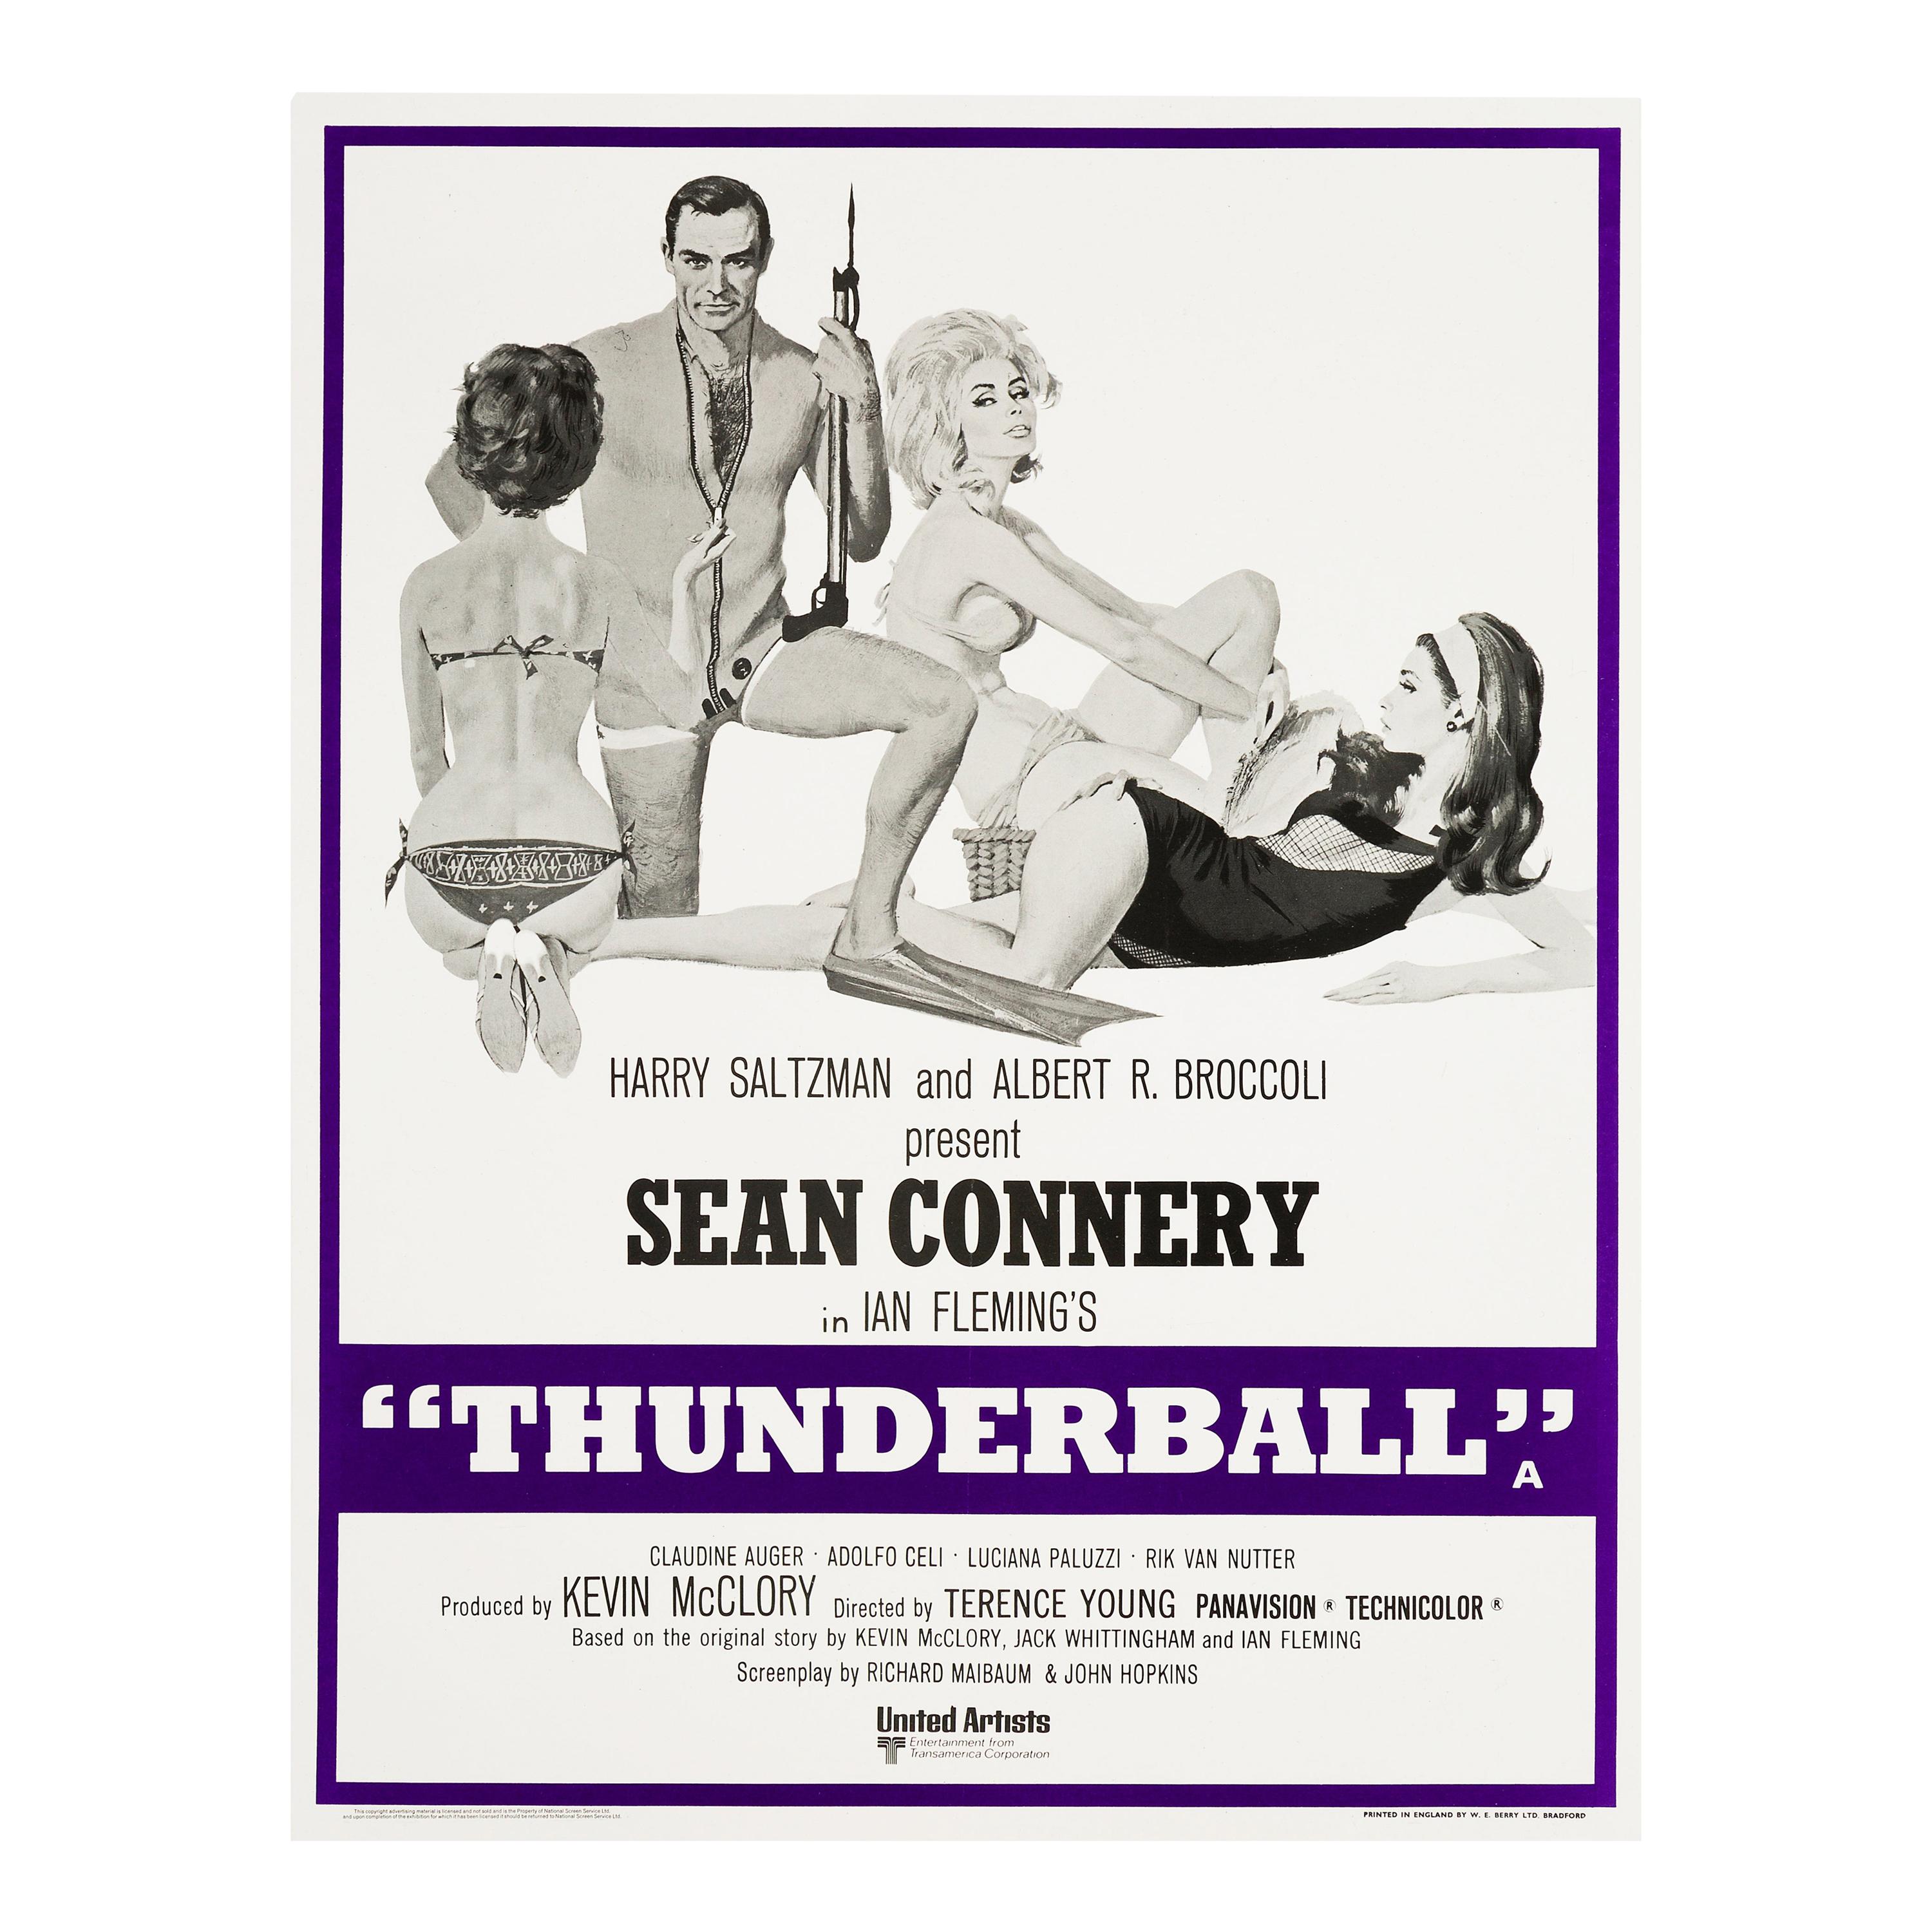 James Bond 'Thunderball' Original Vintage Movie Poster, British, 1973